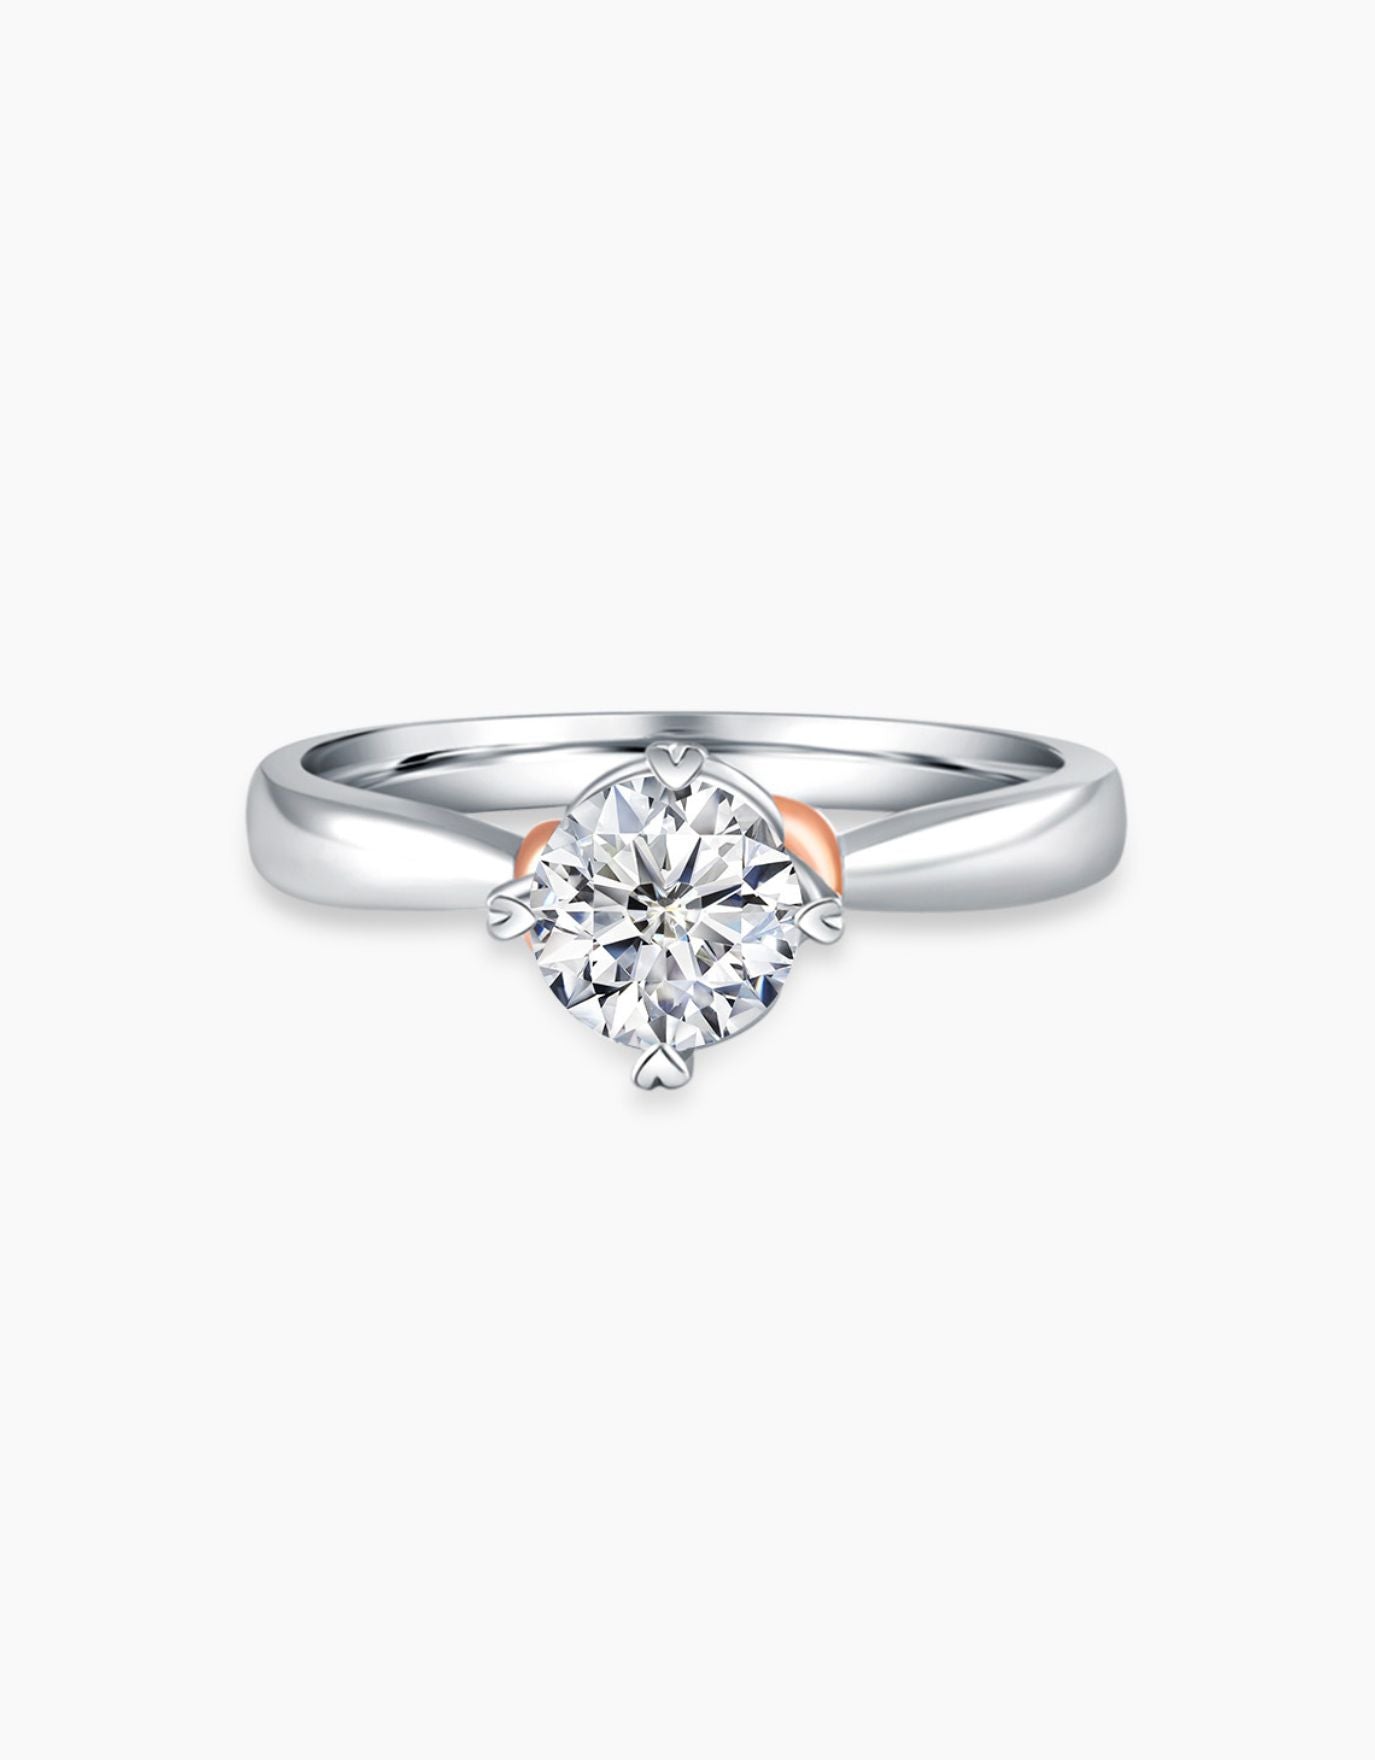 LVC Say Love™ Destiny Elise Diamond Ring - 1.0ct